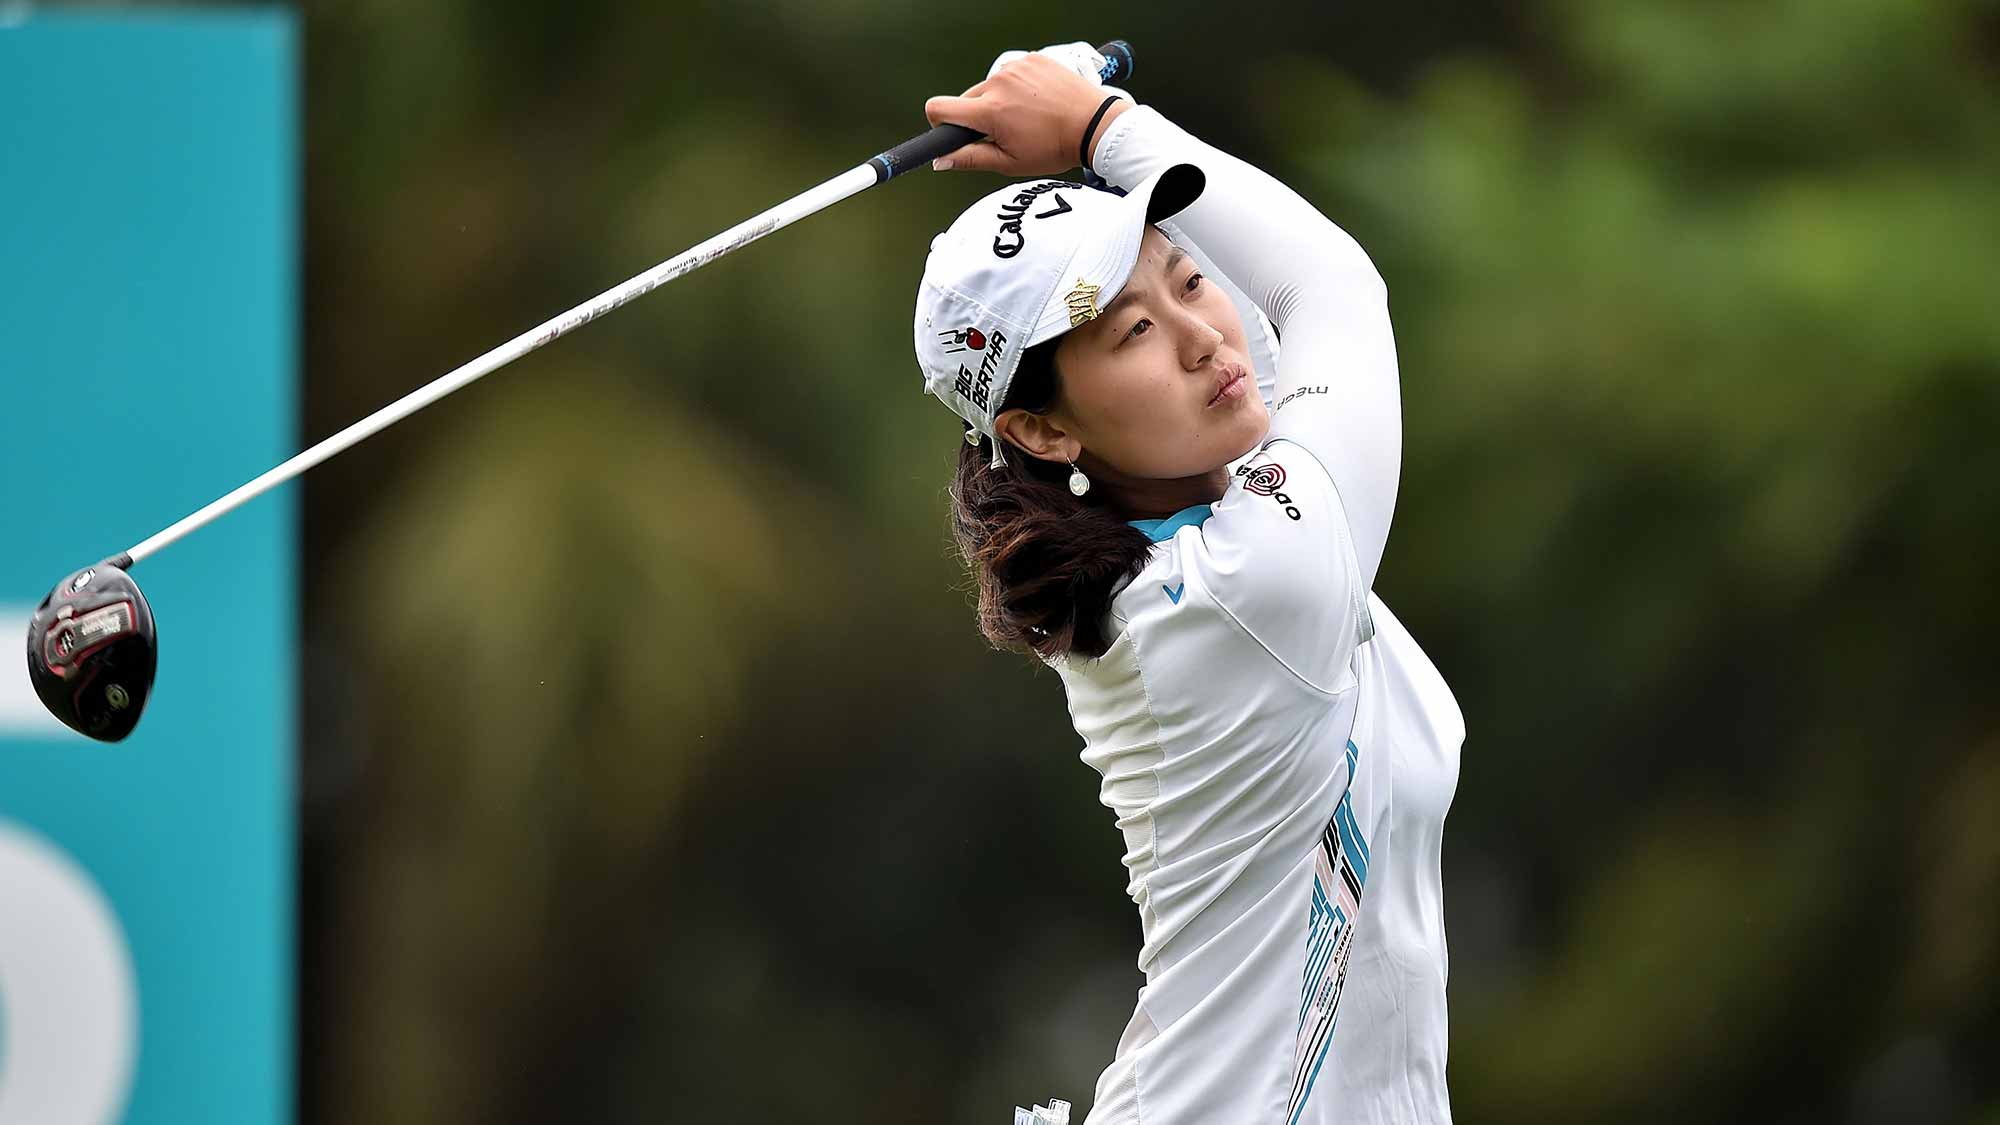 Xi Yu Lin of Republic of China plays the shot during the round one of 2015 Fubon LPGA Taiwan Championship at Miramar Golf & Country Club